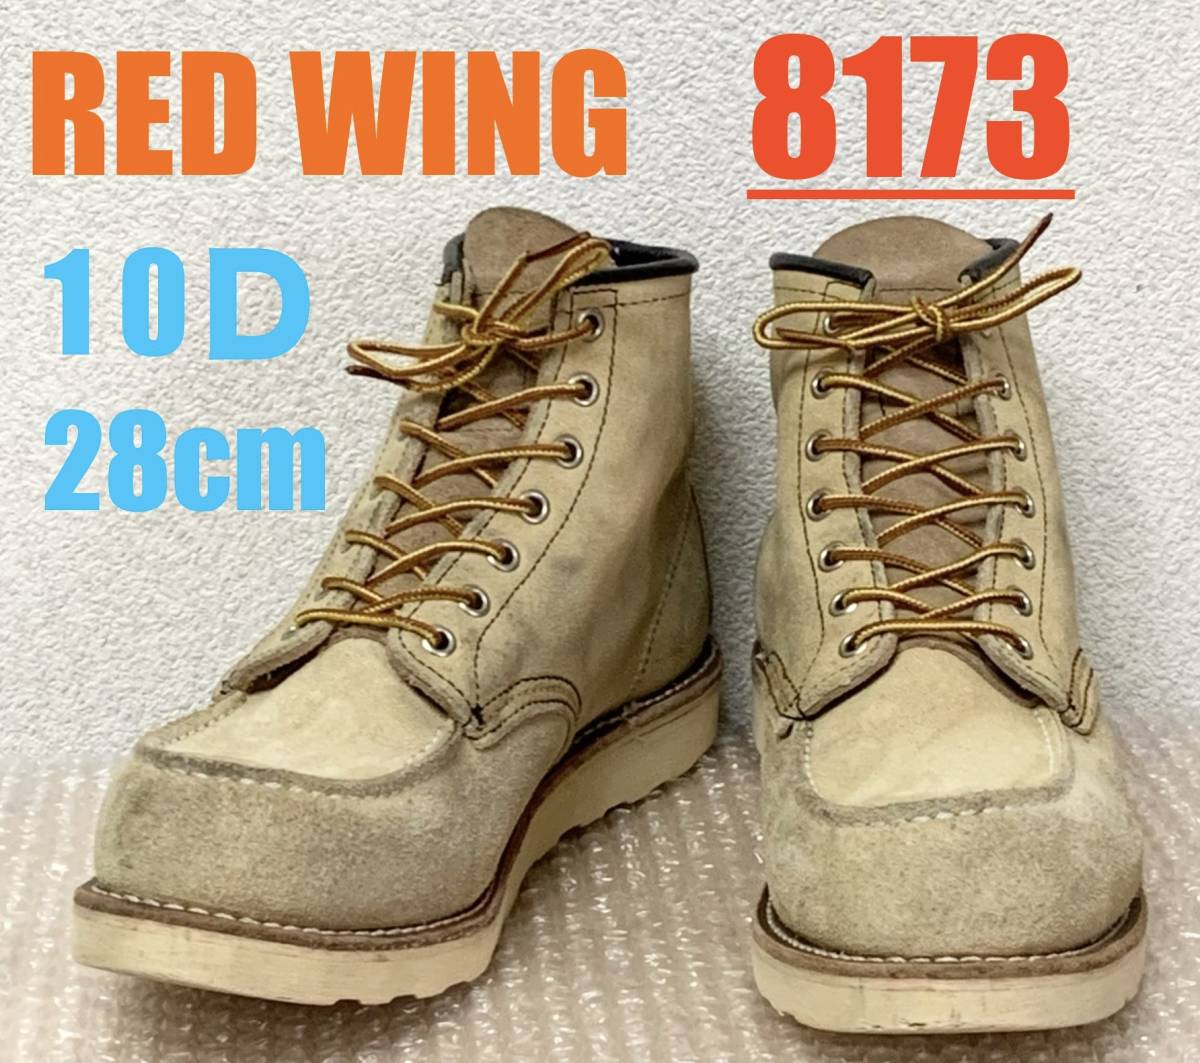 8173【10/D】RED WING ブーツ 28cm◇レッドウィング　ハーレー　gpz 900